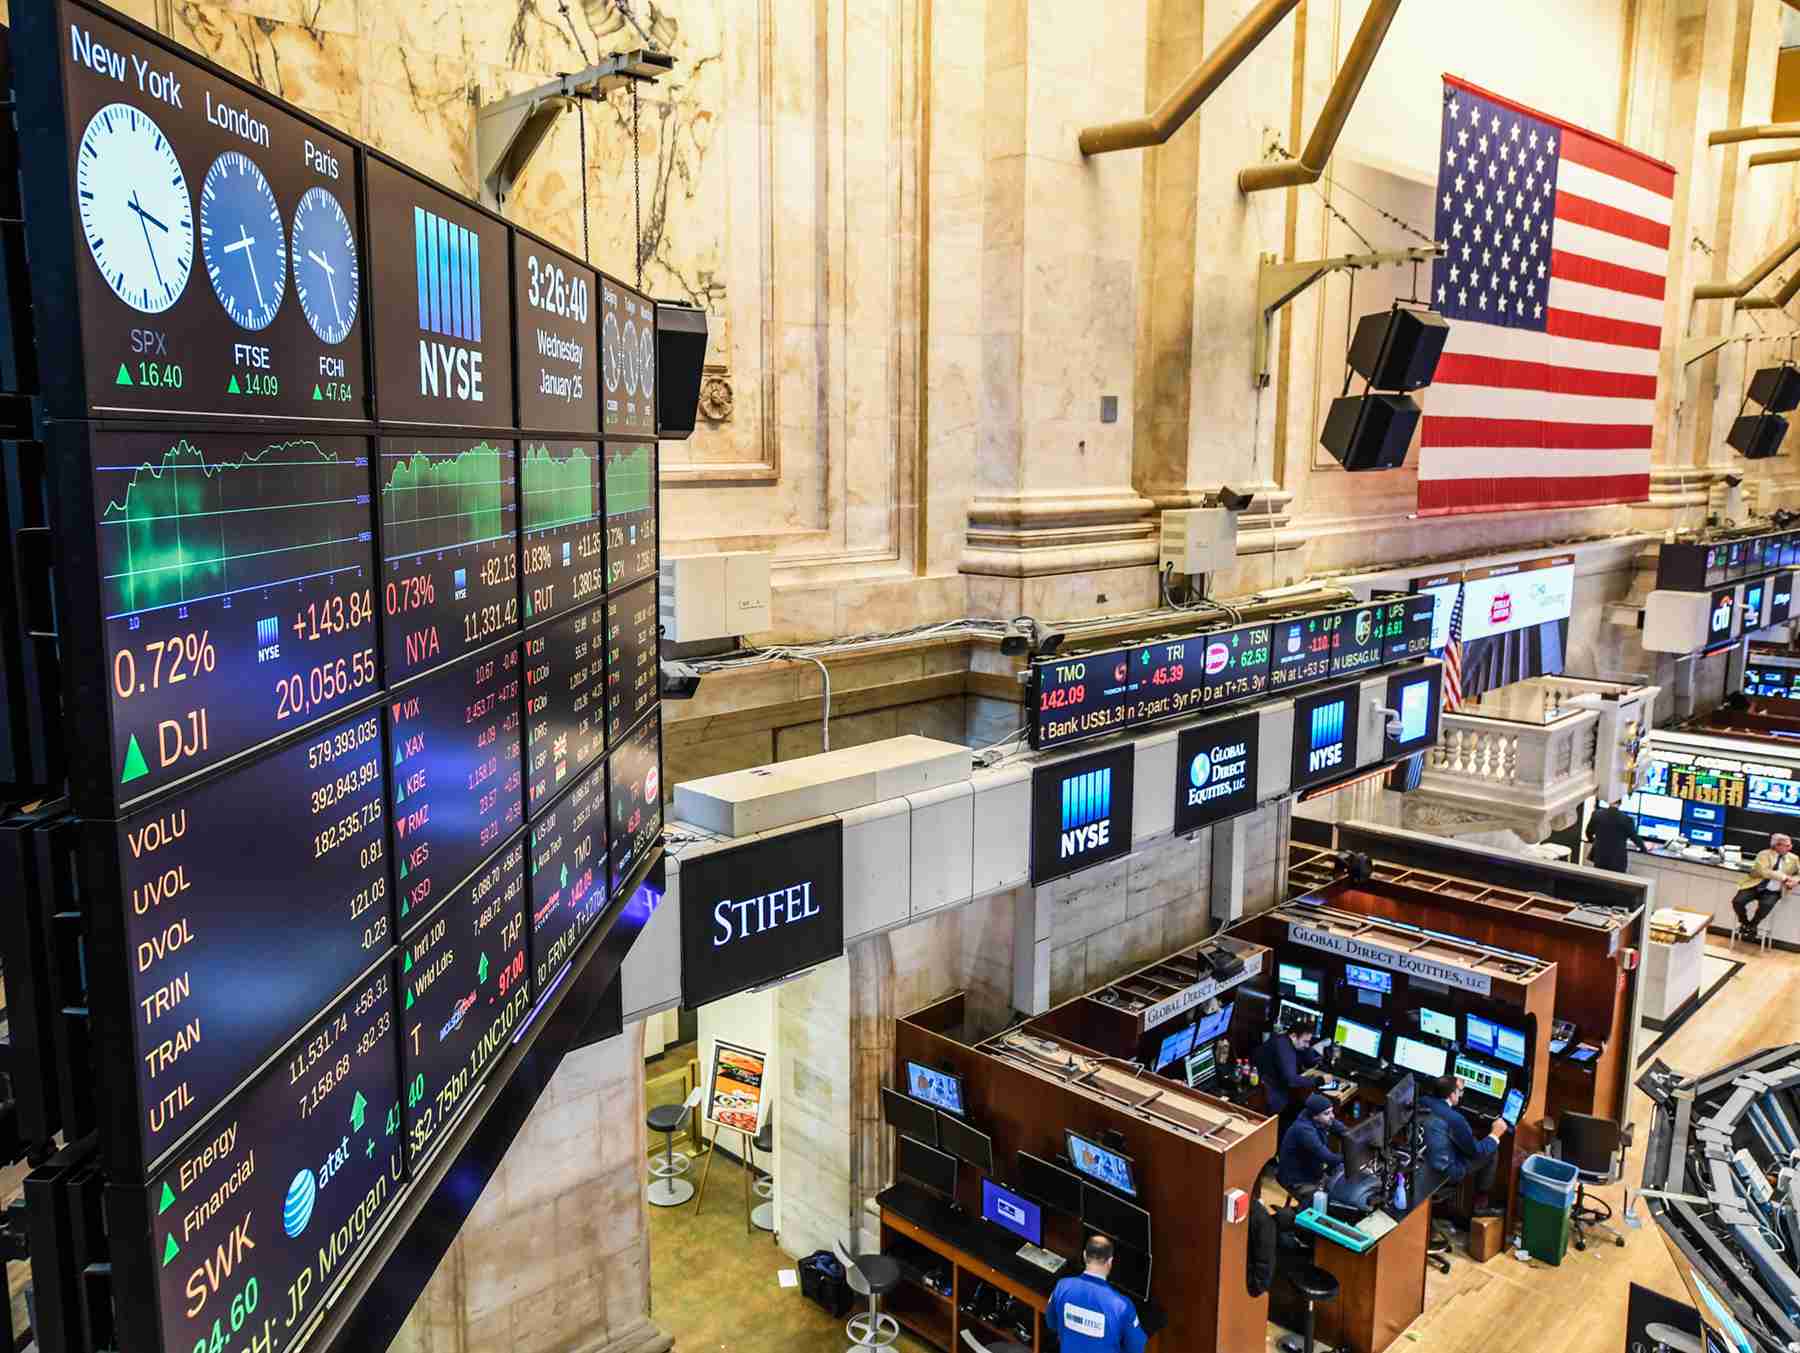 Bullish days may continue for U.S. stock market